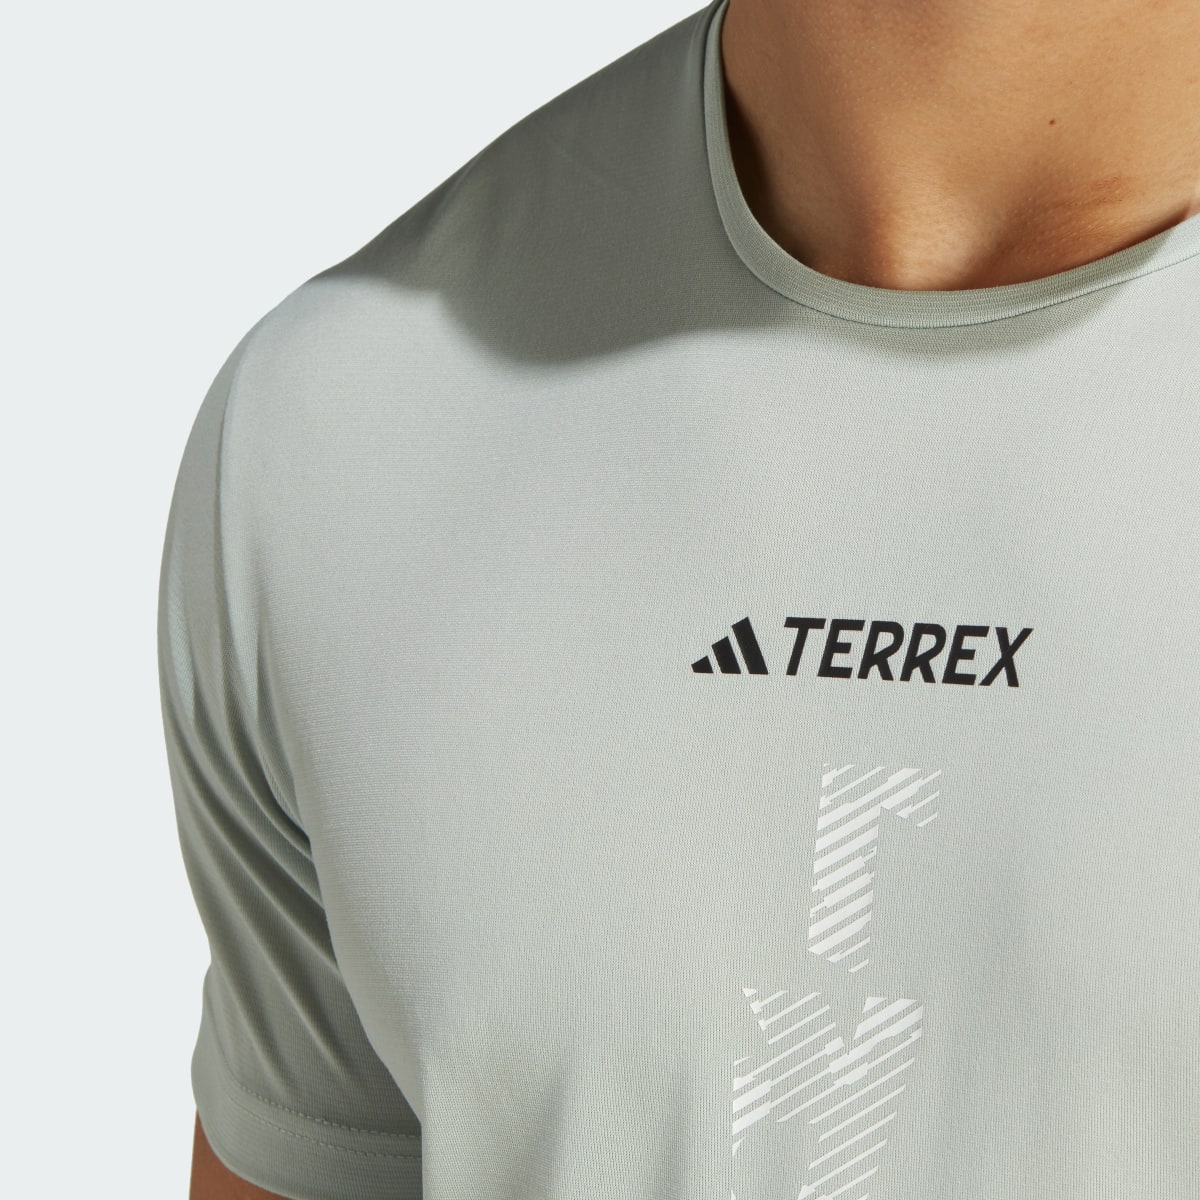 Adidas Terrex Agravic Trail Running T-Shirt. 9